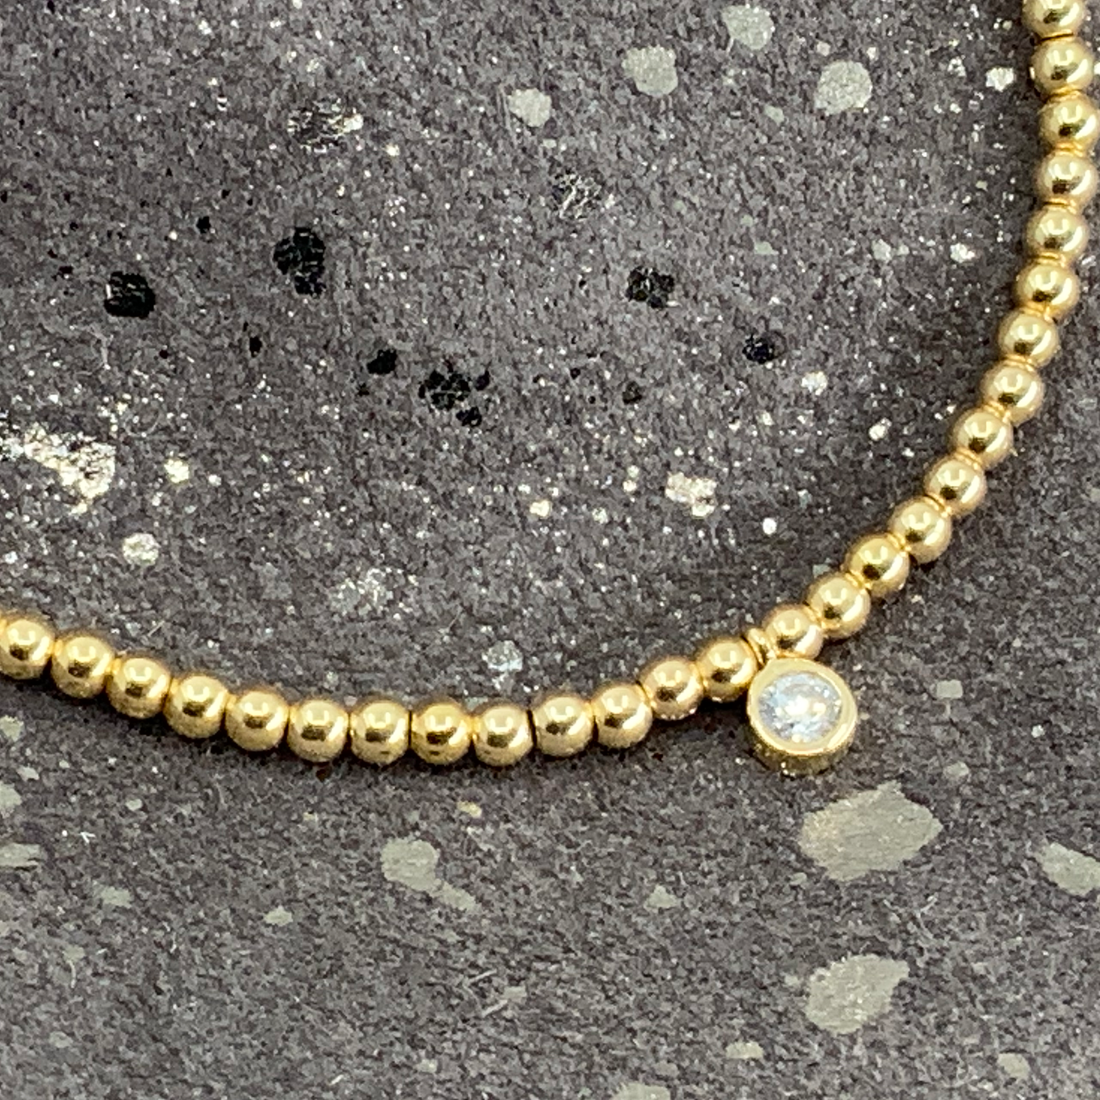 Diamond 14ct yellow gold beaded adjustable corded friendship bracelet